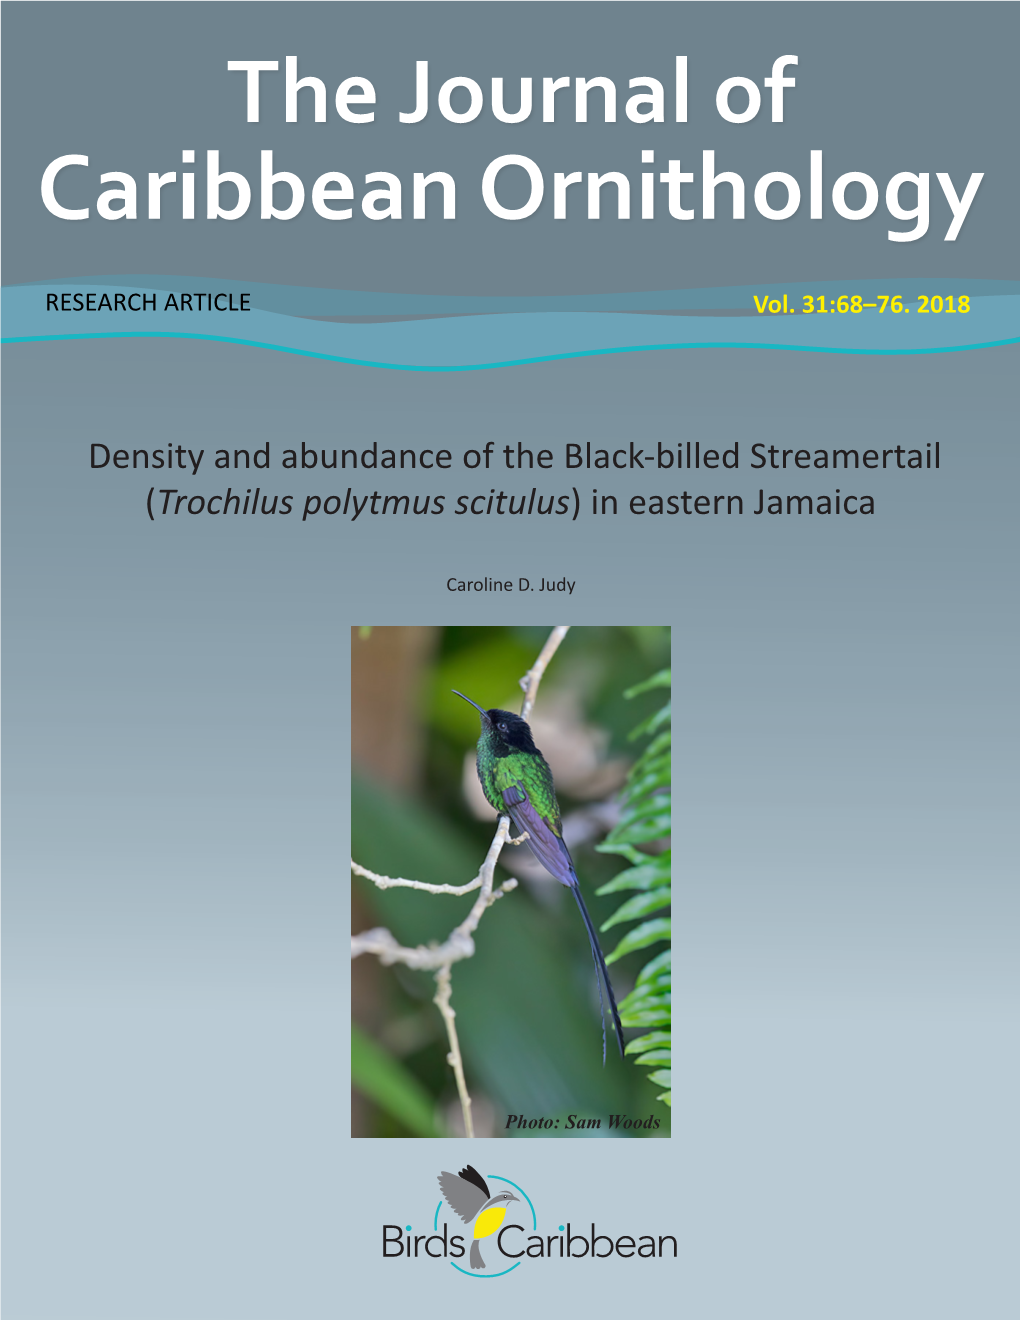 Trochilus Polytmus Scitulus) in Eastern Jamaica